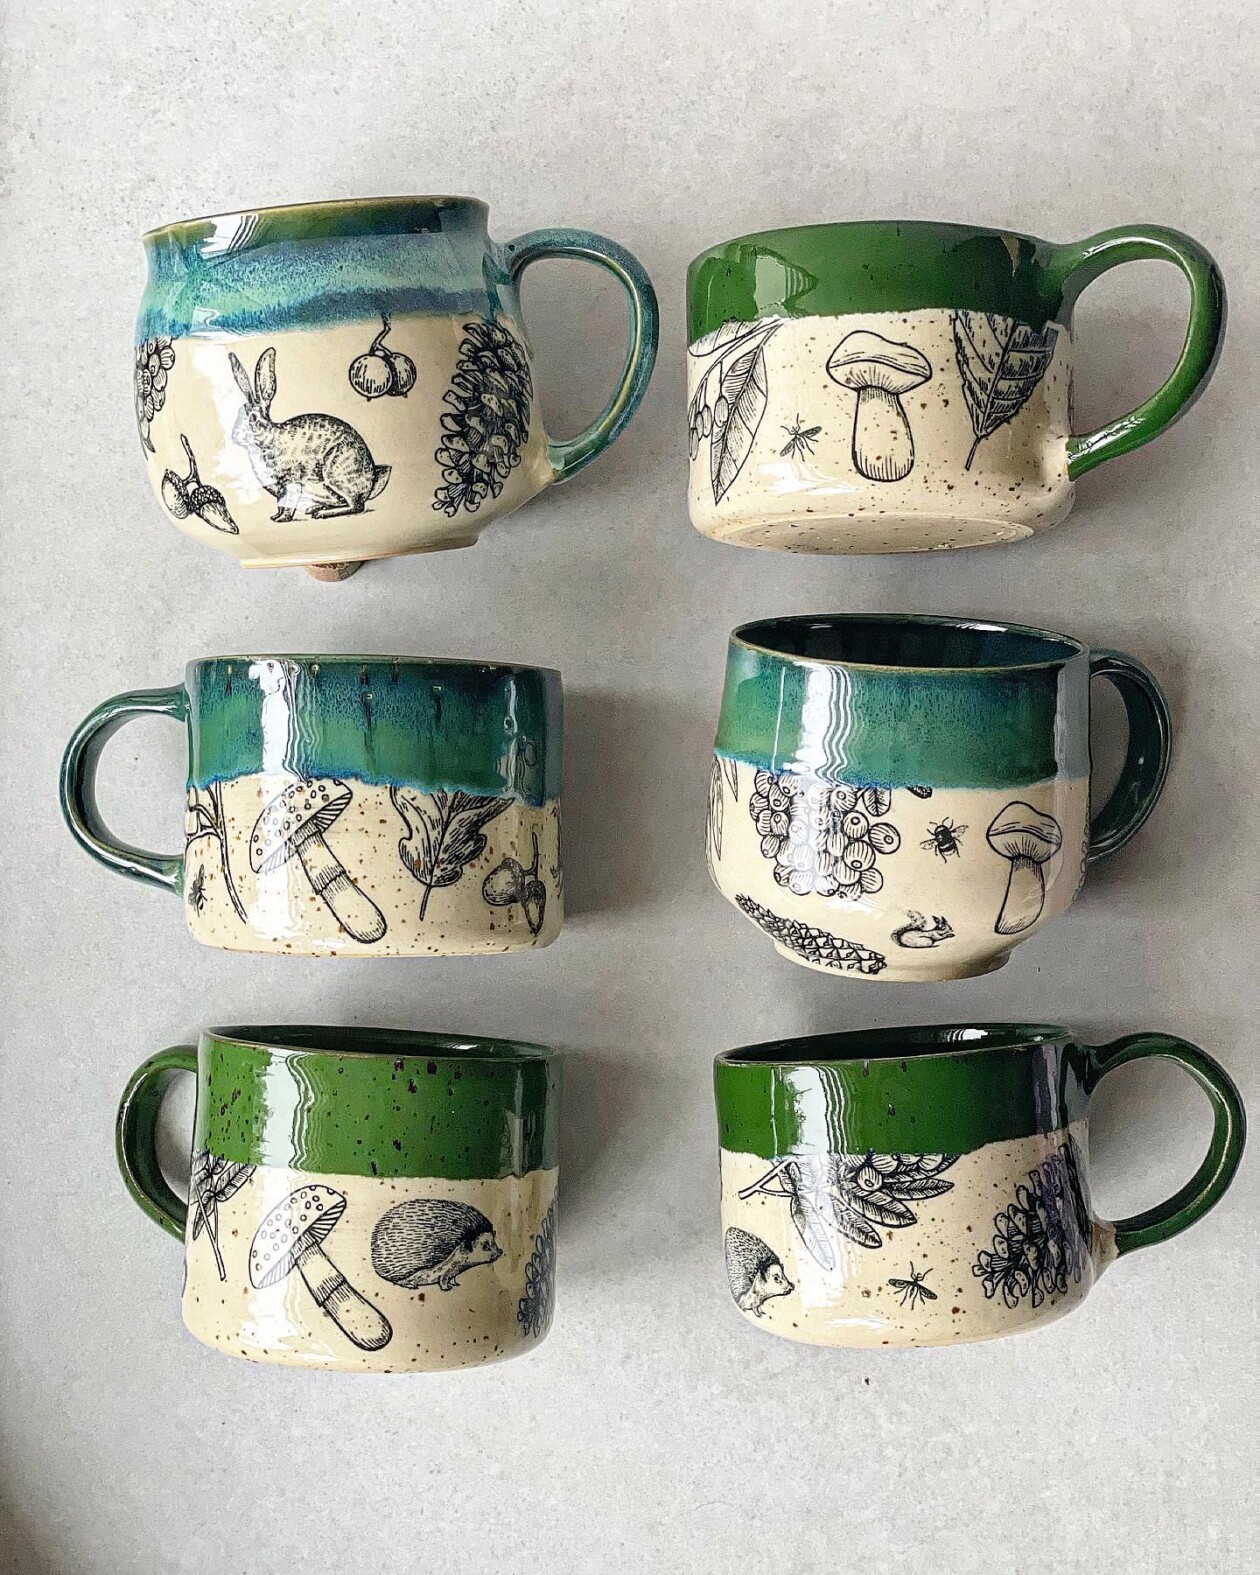 Ceramics With Vintage Motifs By Joanna Dylowska (7)